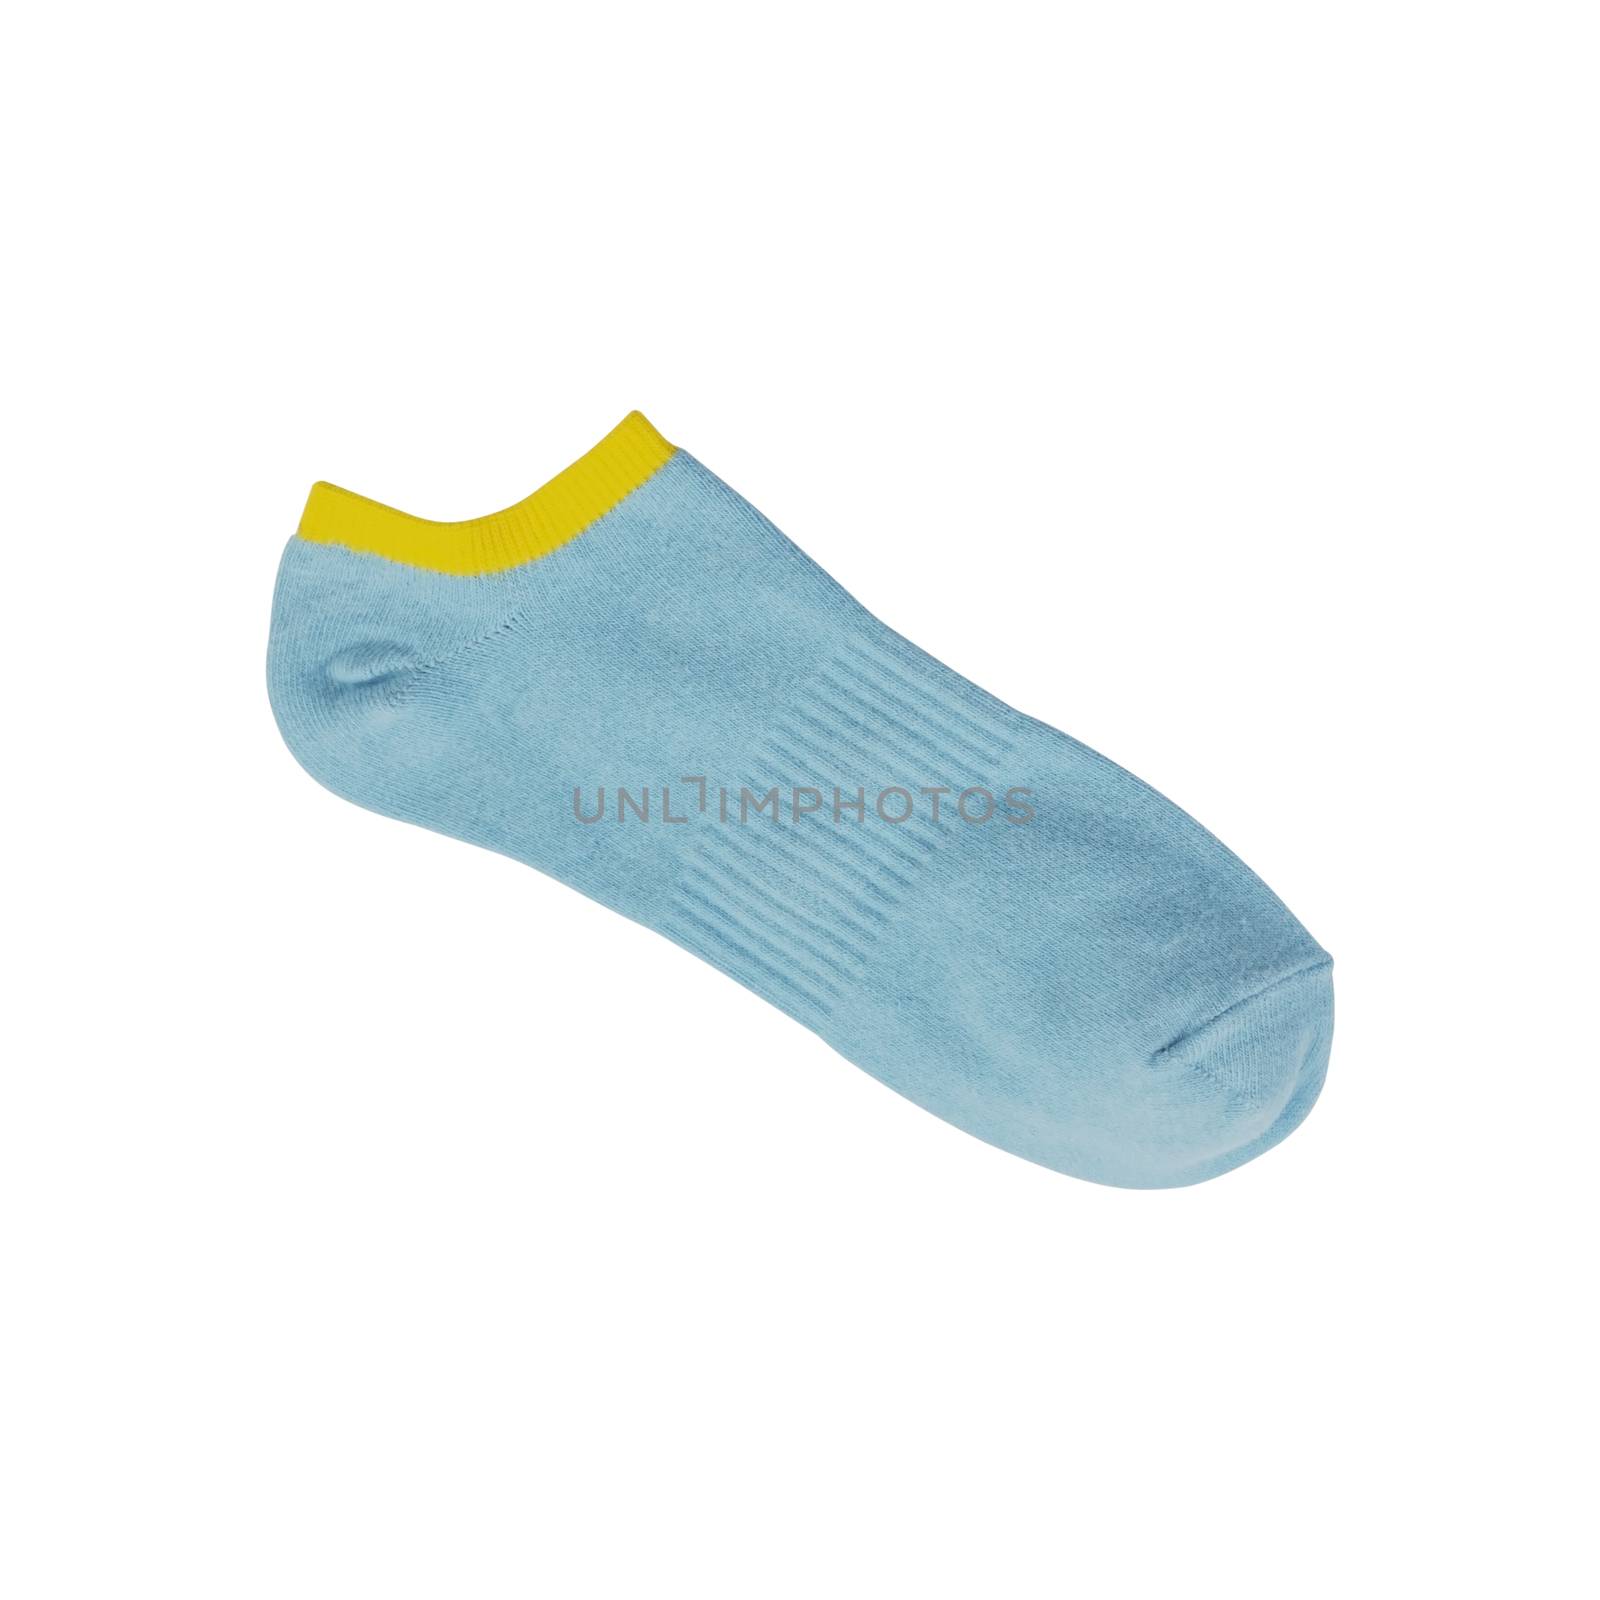 Blue short sport sock isolated on white background.